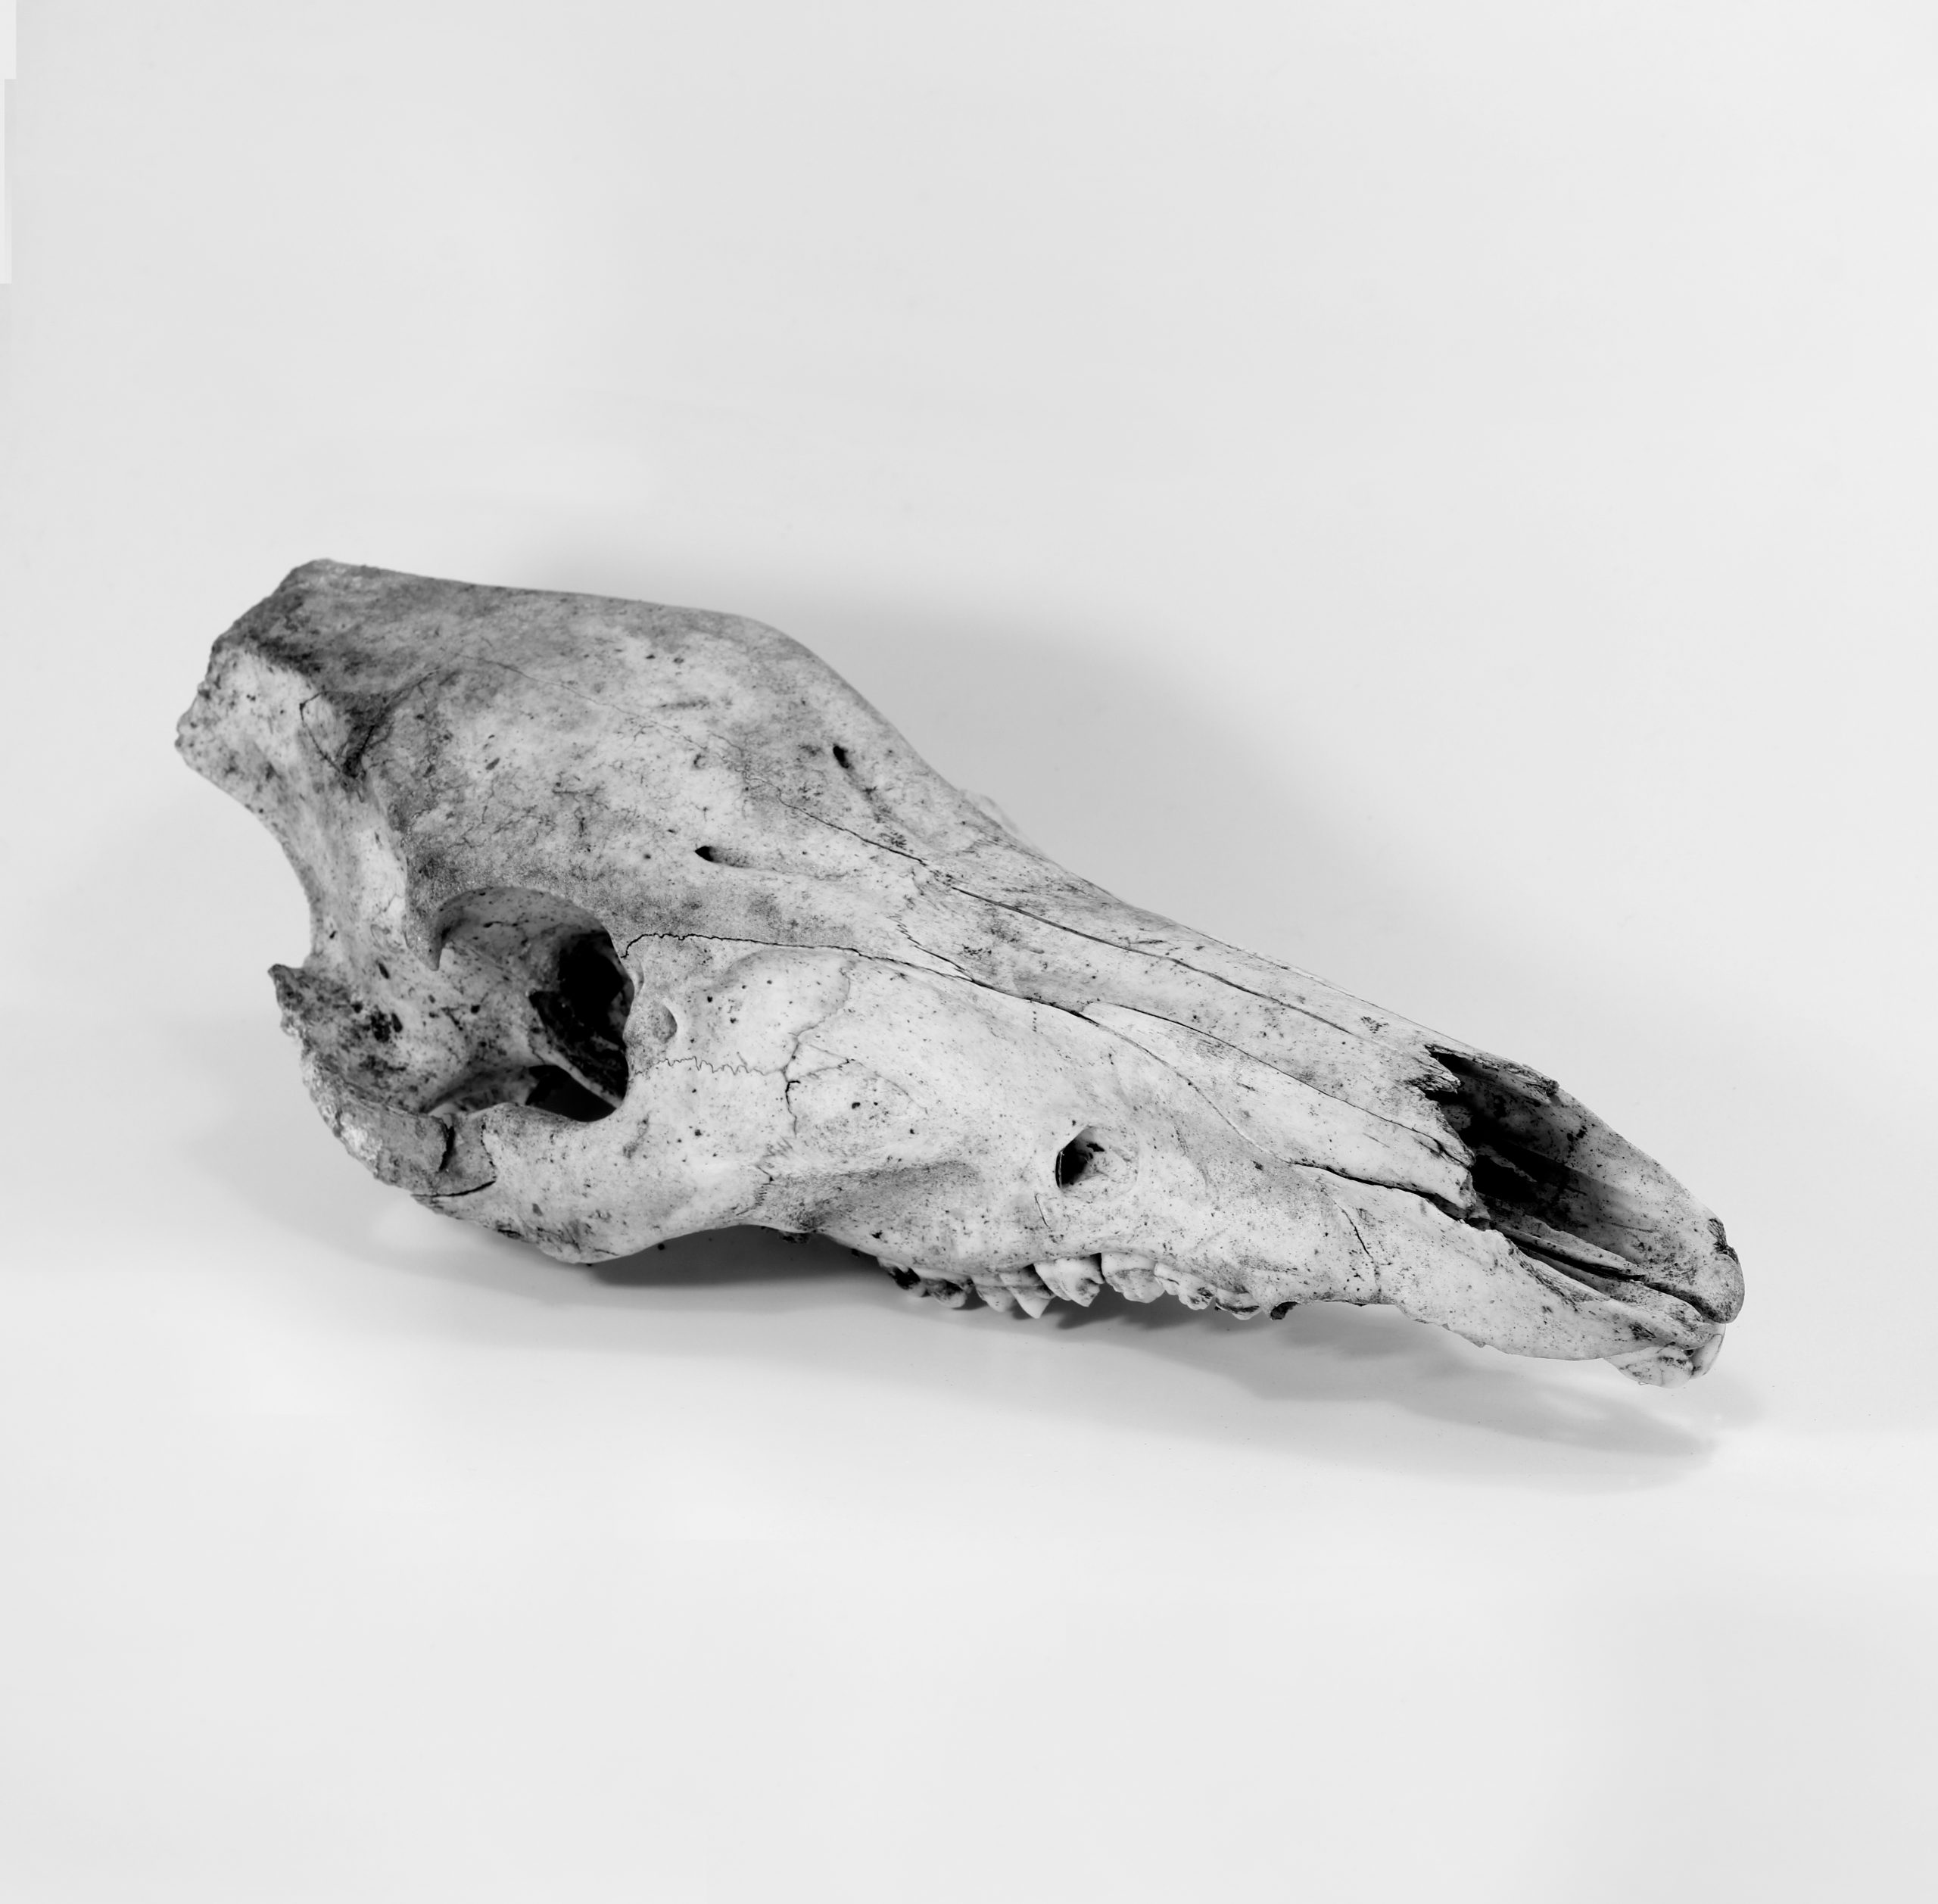 Wild boar skull. Photo: Art Pictures/Shutterstock